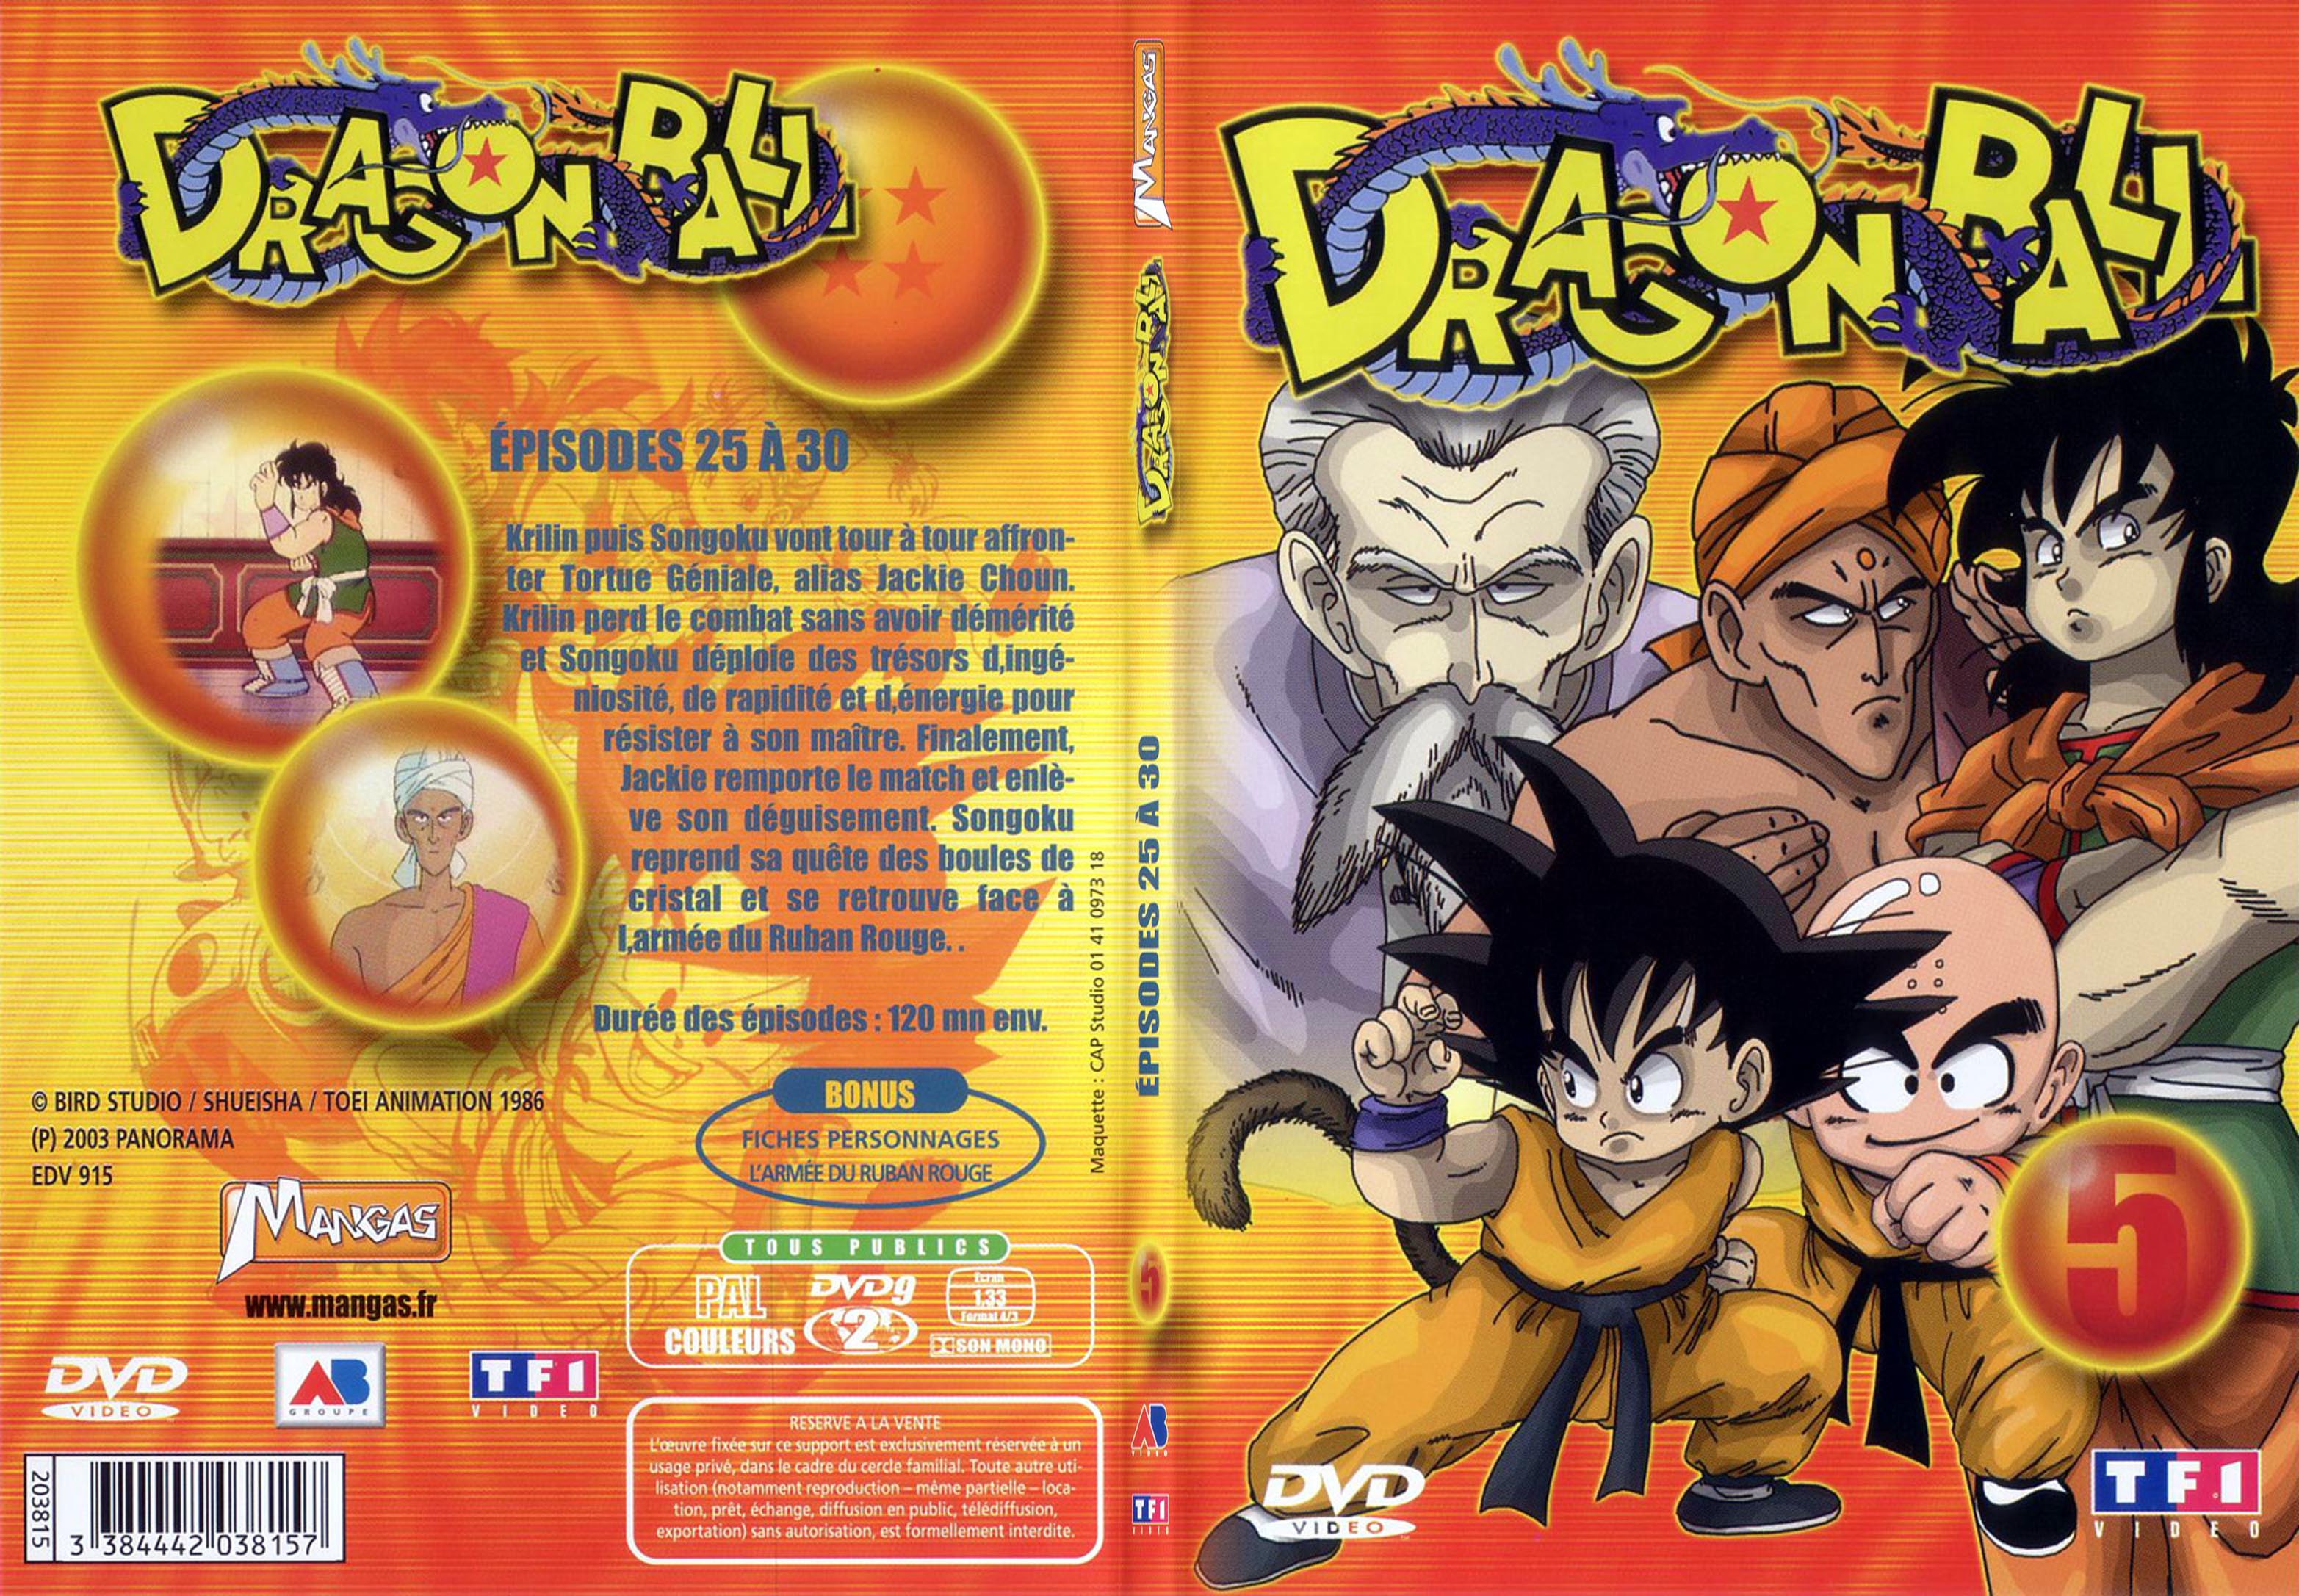 Jaquette DVD Dragon ball vol 5 - SLIM